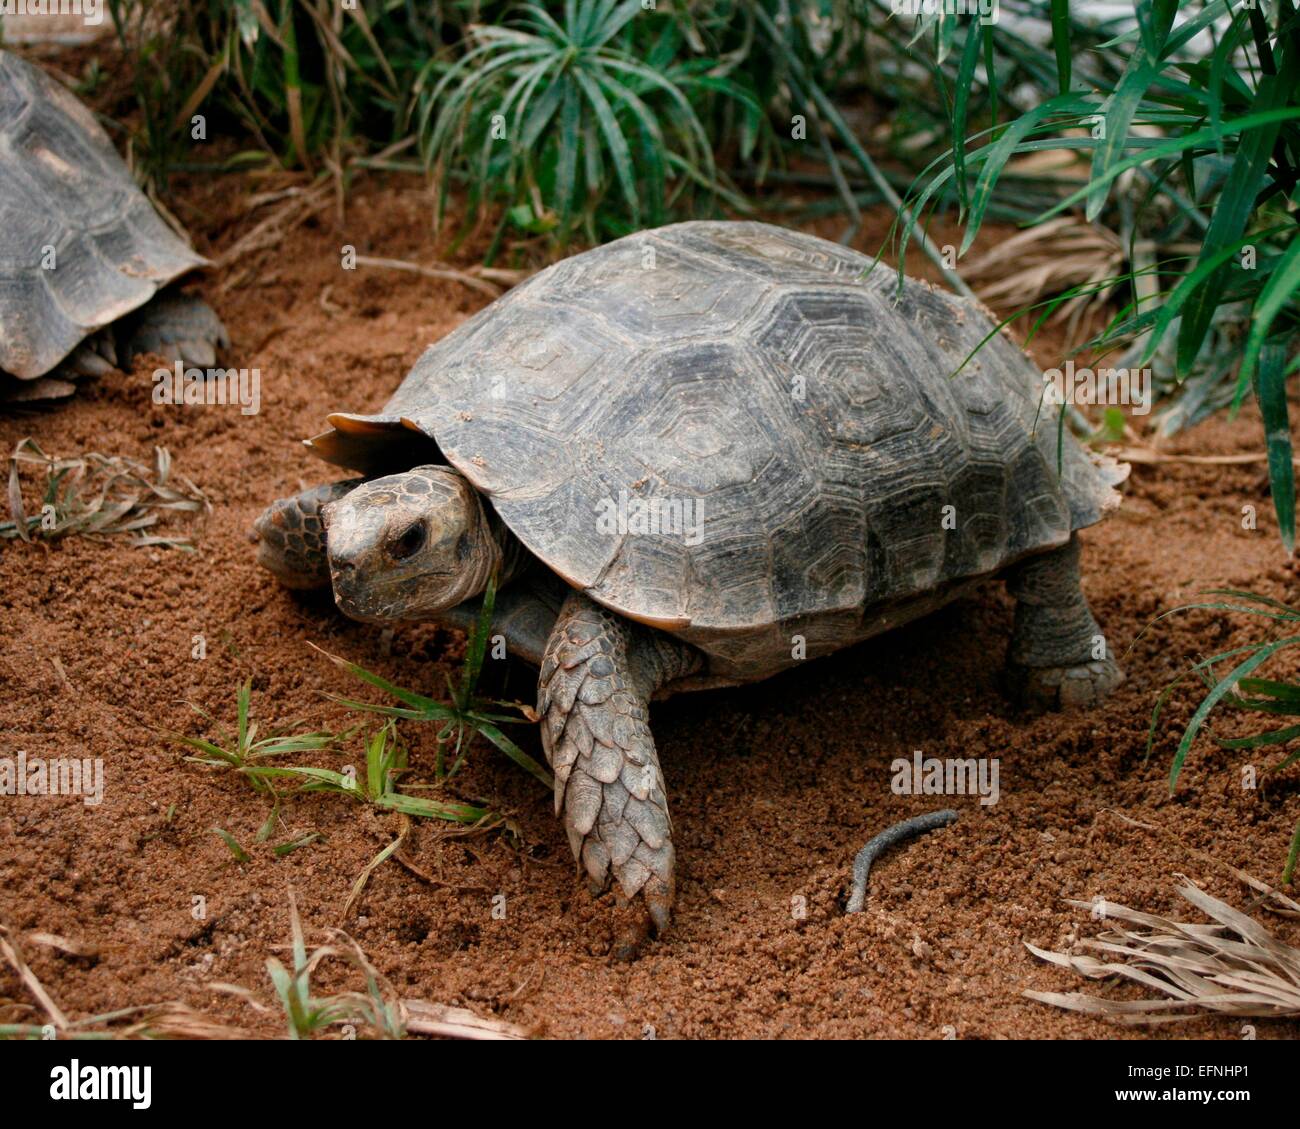 Asian Forest Tortoise or Asian brown Tortoise (Manouria emys). Stock Photo